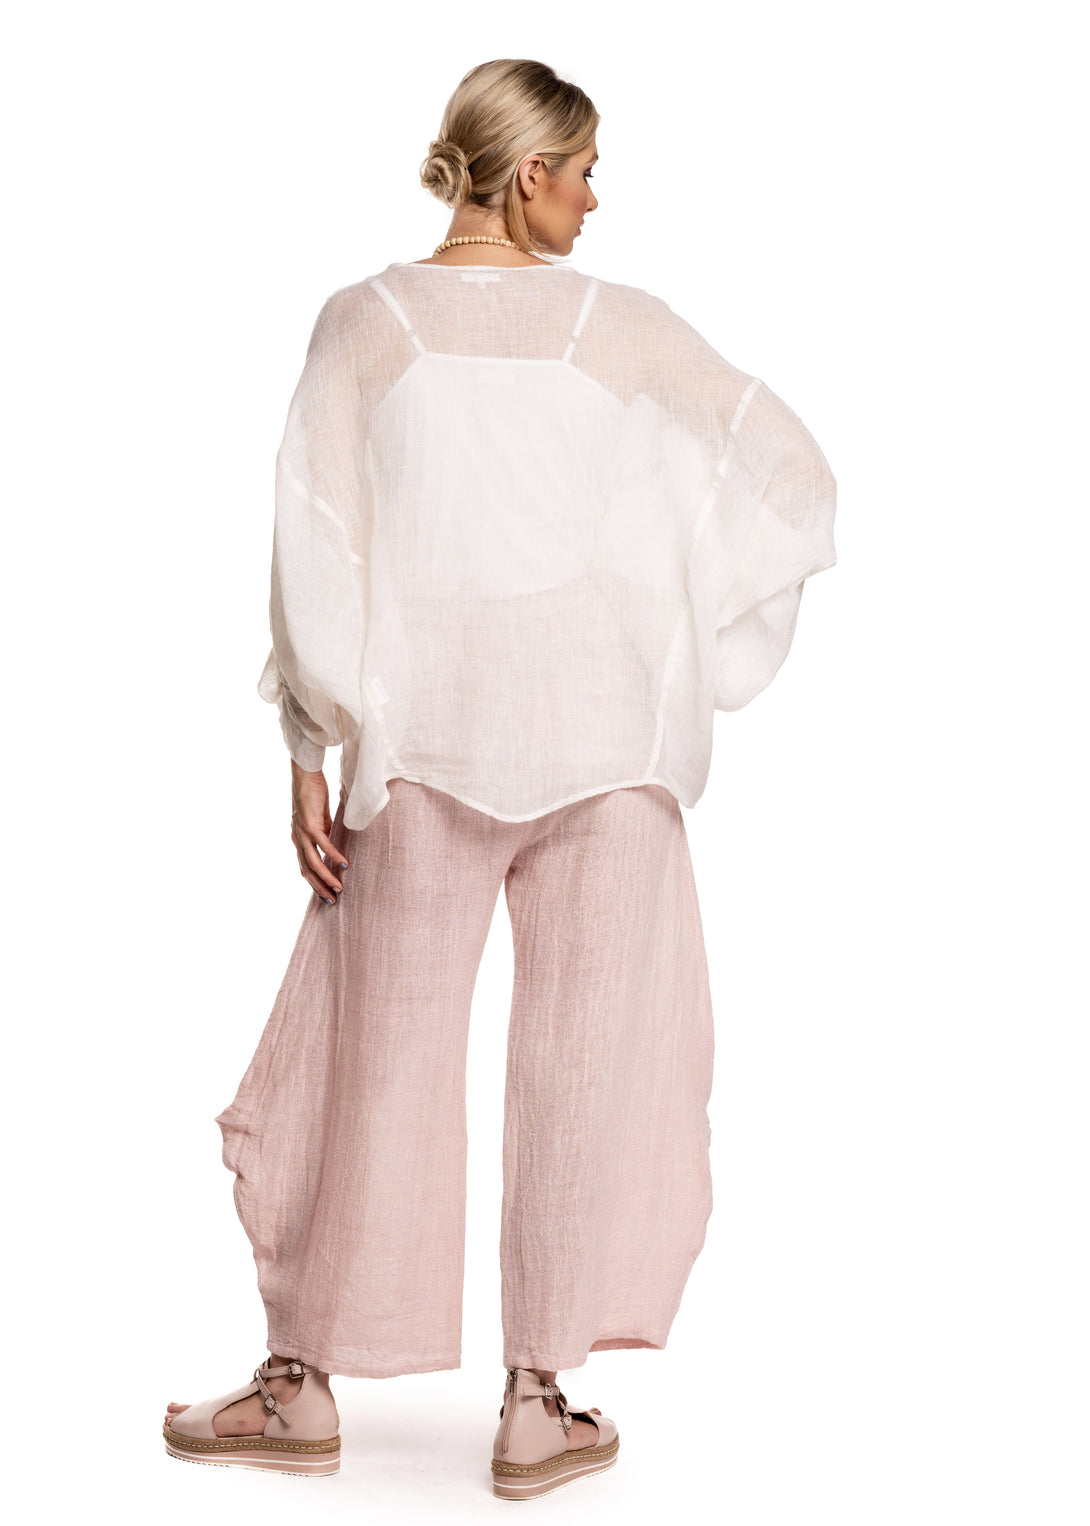 Aletha Pants in Blush - Imagine Fashion